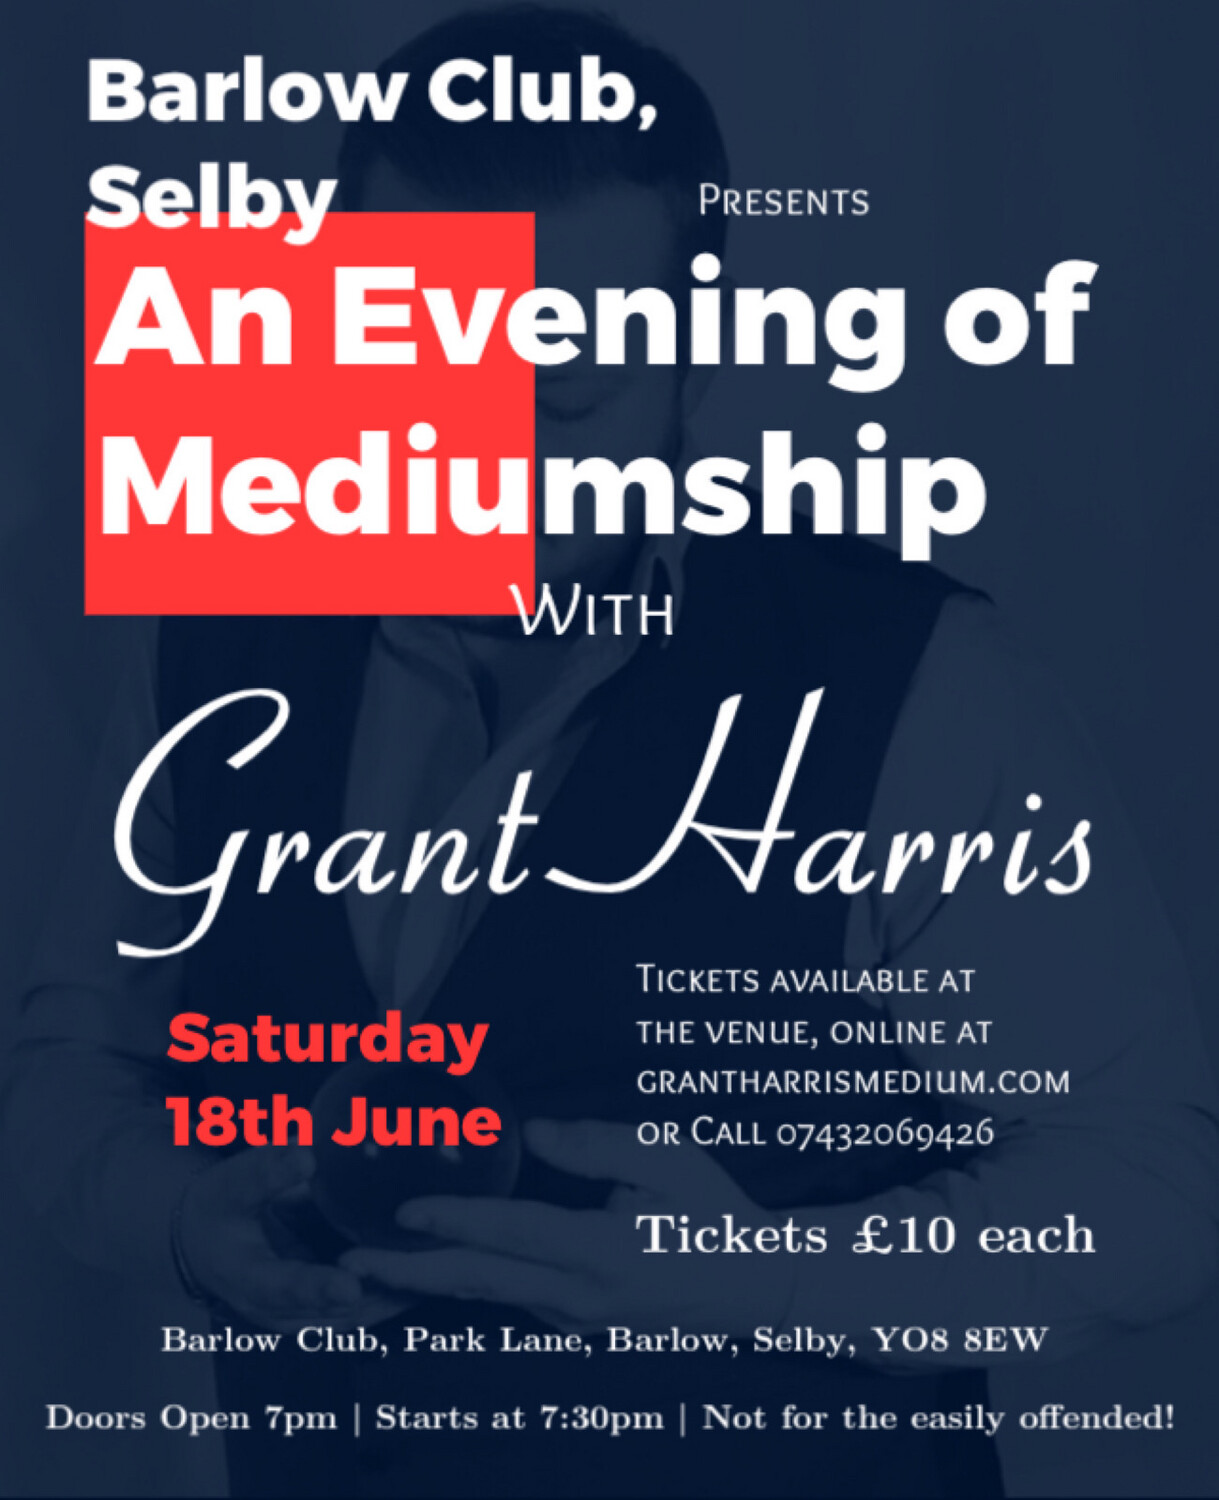 Evening of Mediumship, Barlow Club, Selby, Sat 18th June 2022